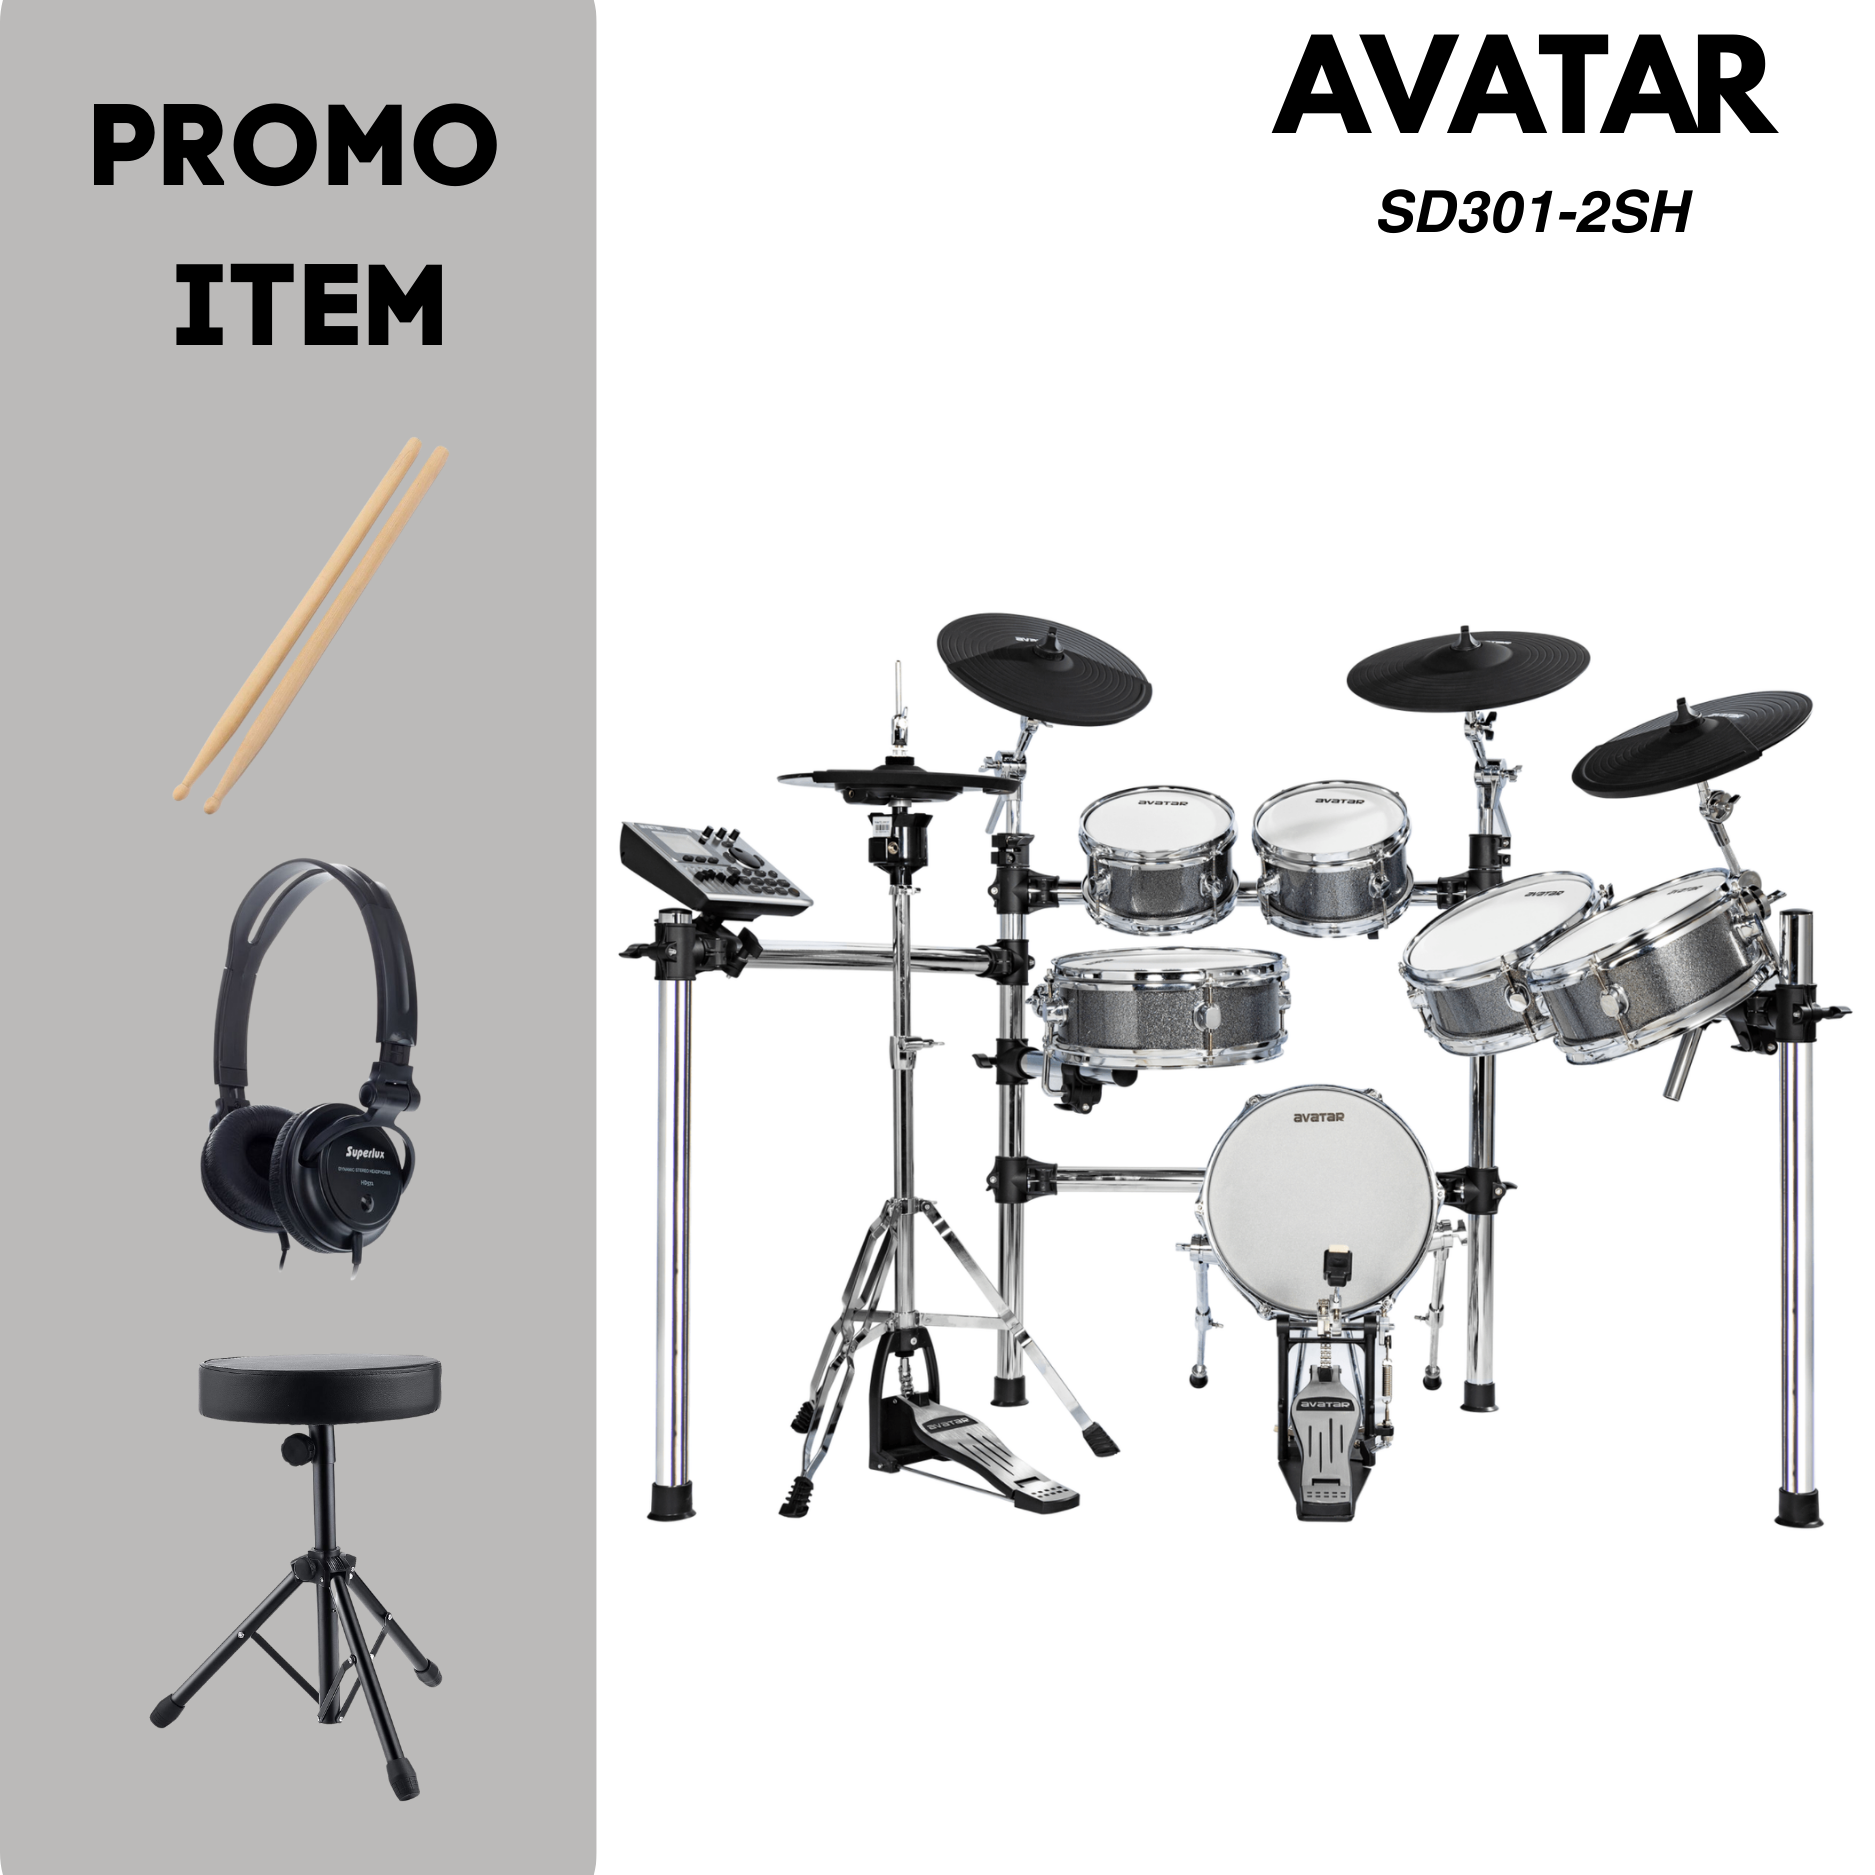 Avatar SD301-2SH With Promo Items Zoso Music